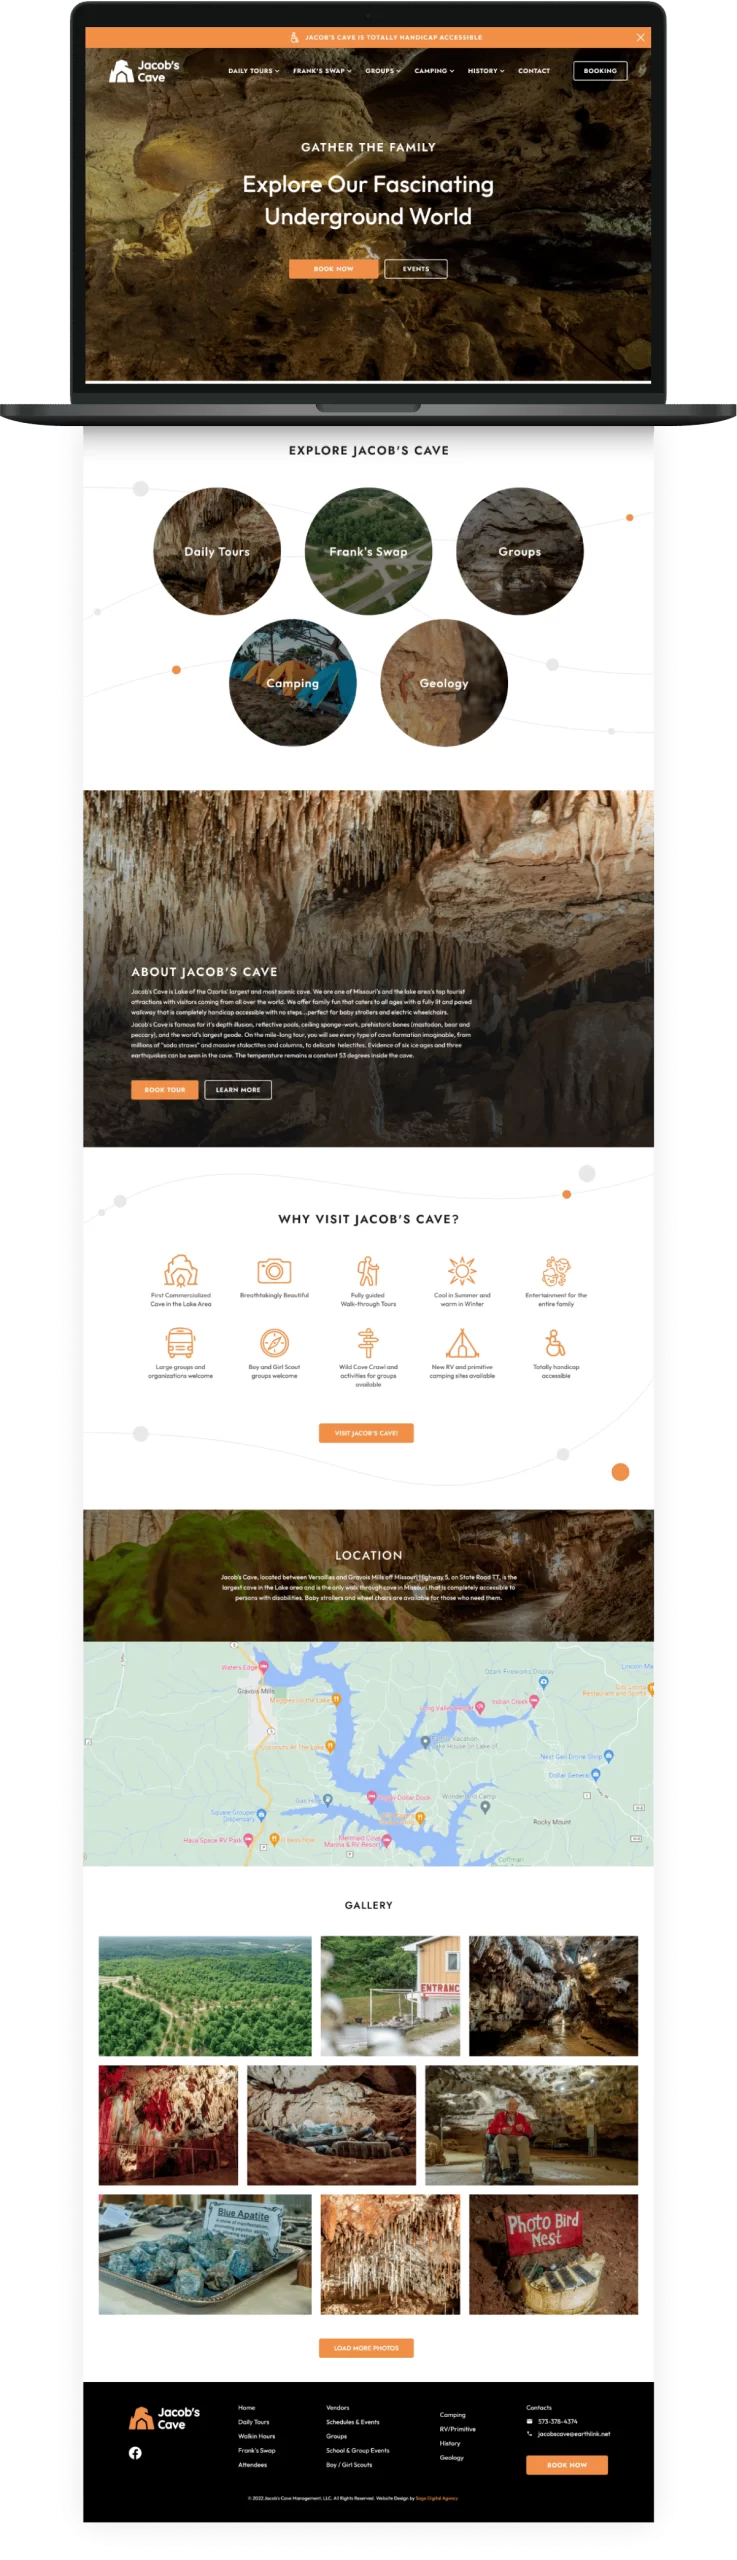 Jacob's Cave web design portfolio mockup page